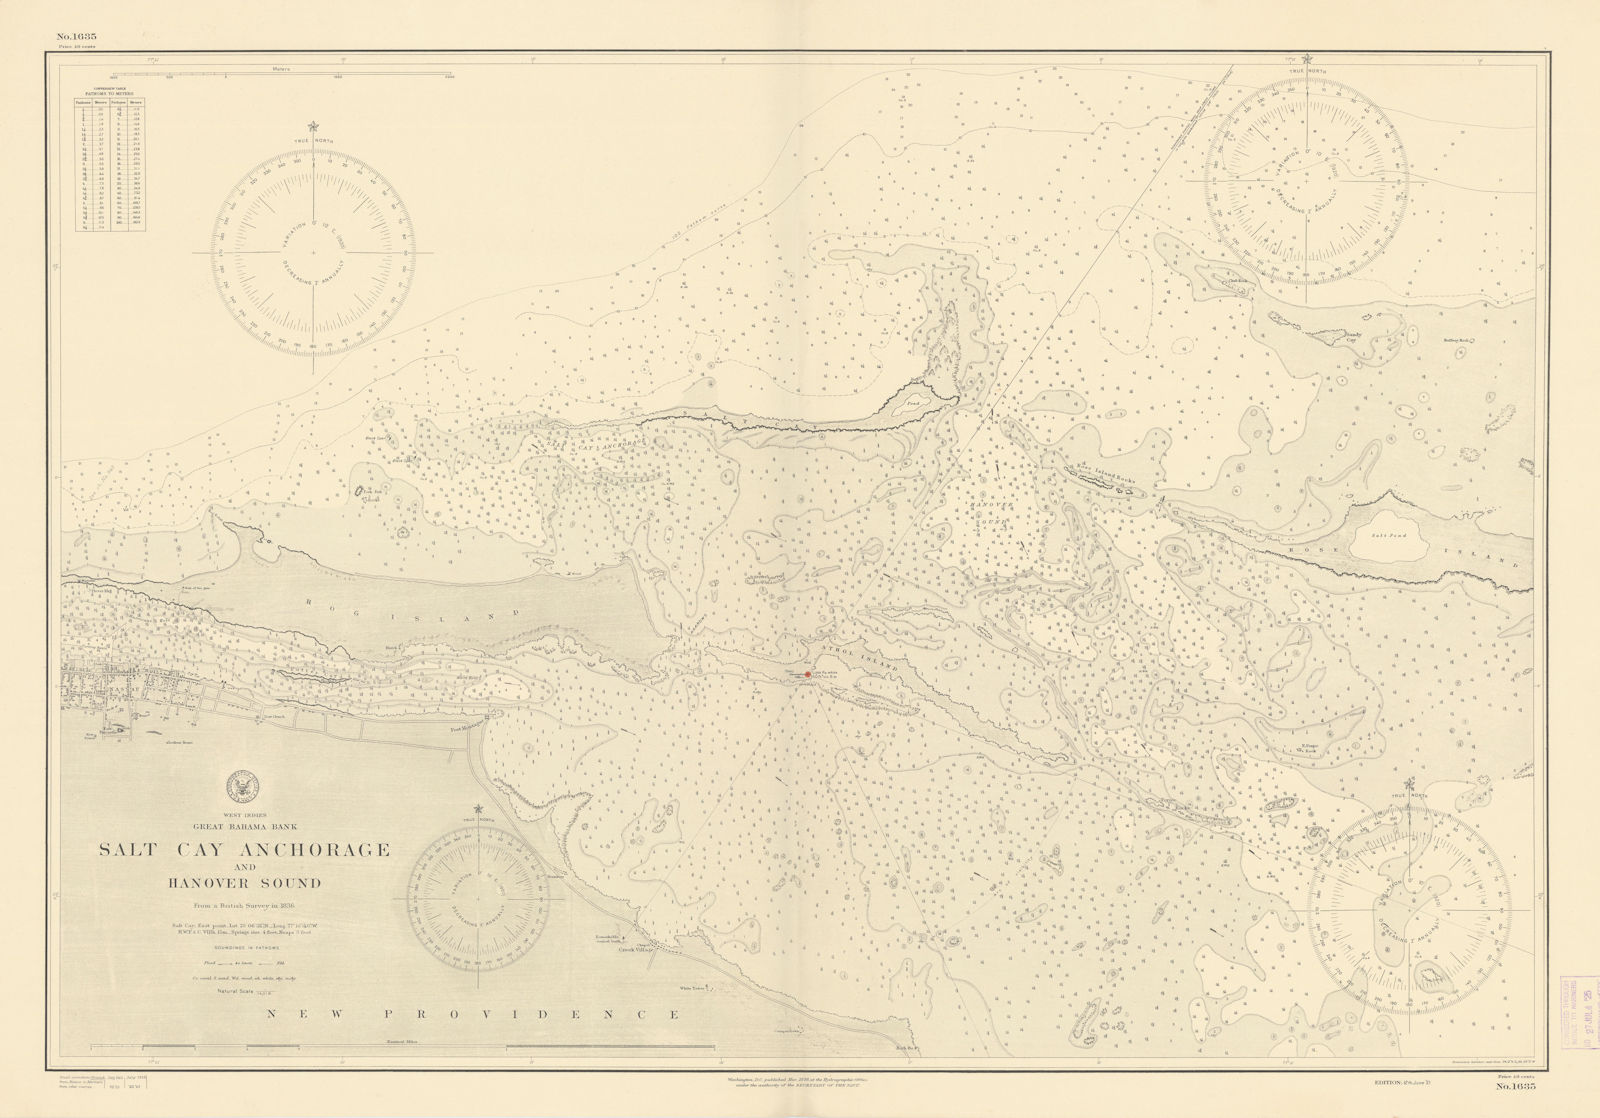 Nassau New Providence Paradise Island Bahamas. US Navy sea chart 1898 (1925) map